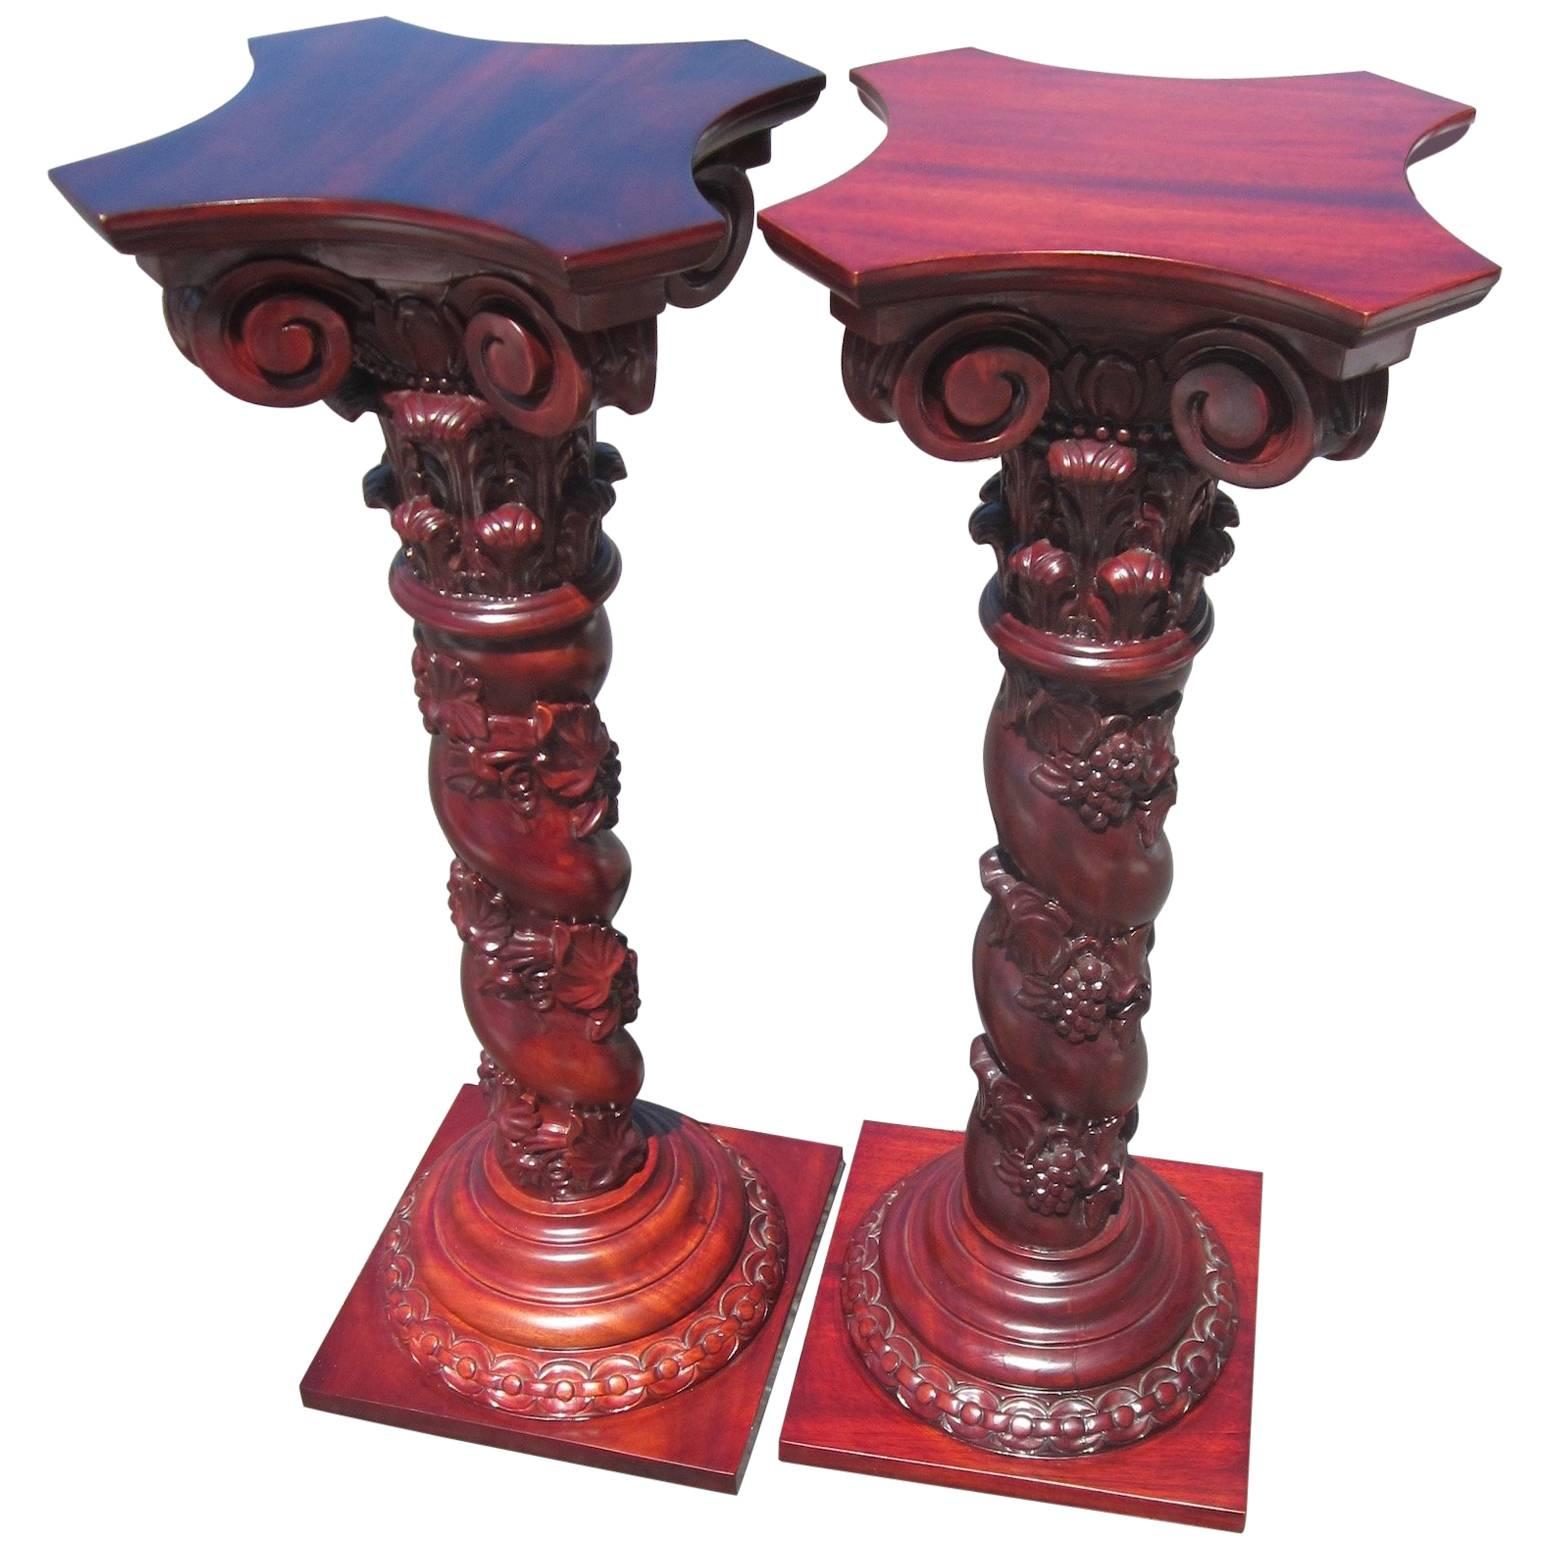 Pair of Carved Mahogany Pedestals